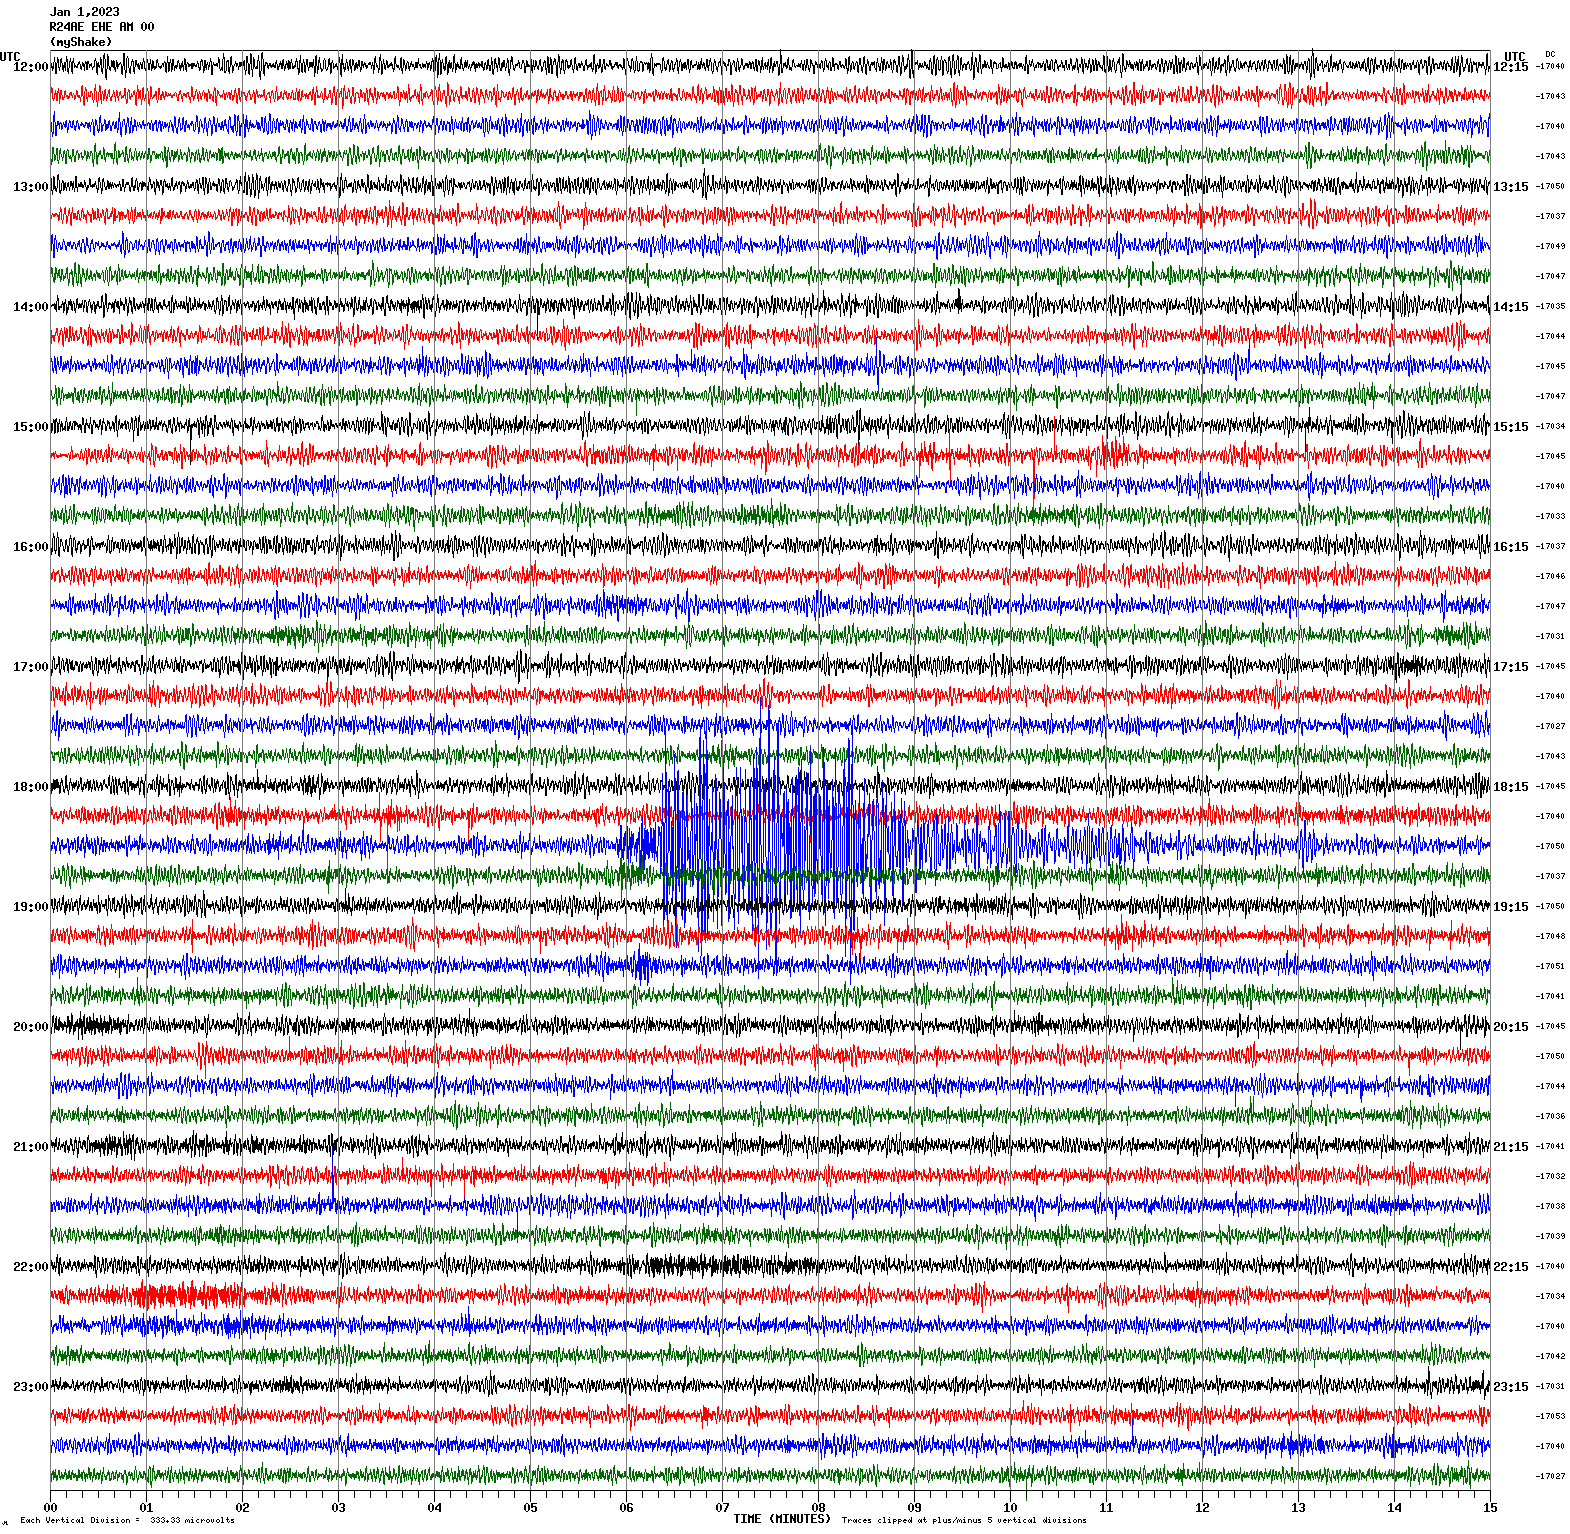 /seismic-data/R24AE/R24AE_EHE_AM_00.2023010112.gif